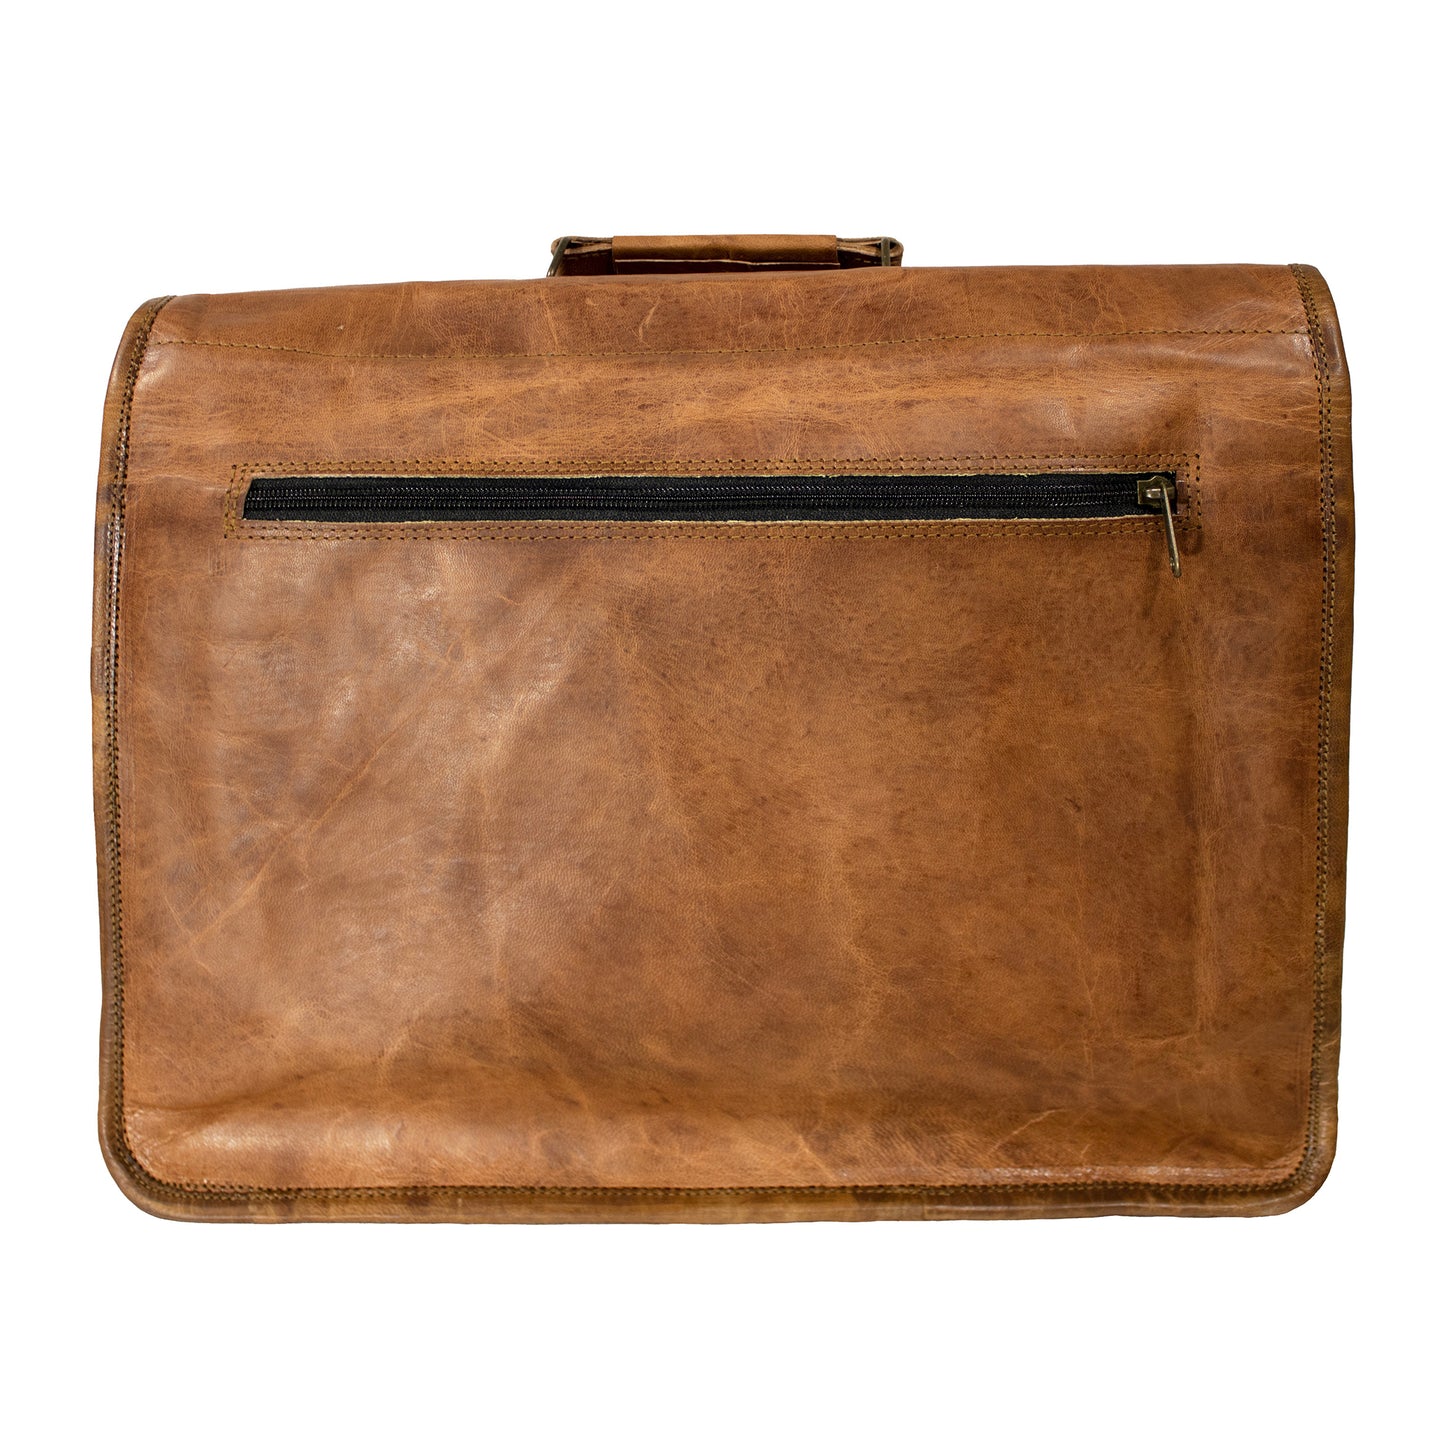 Men's Leather Laptop Bag 17 Inch Laptops - Vintage Messenger Satchel The Real Leather Company